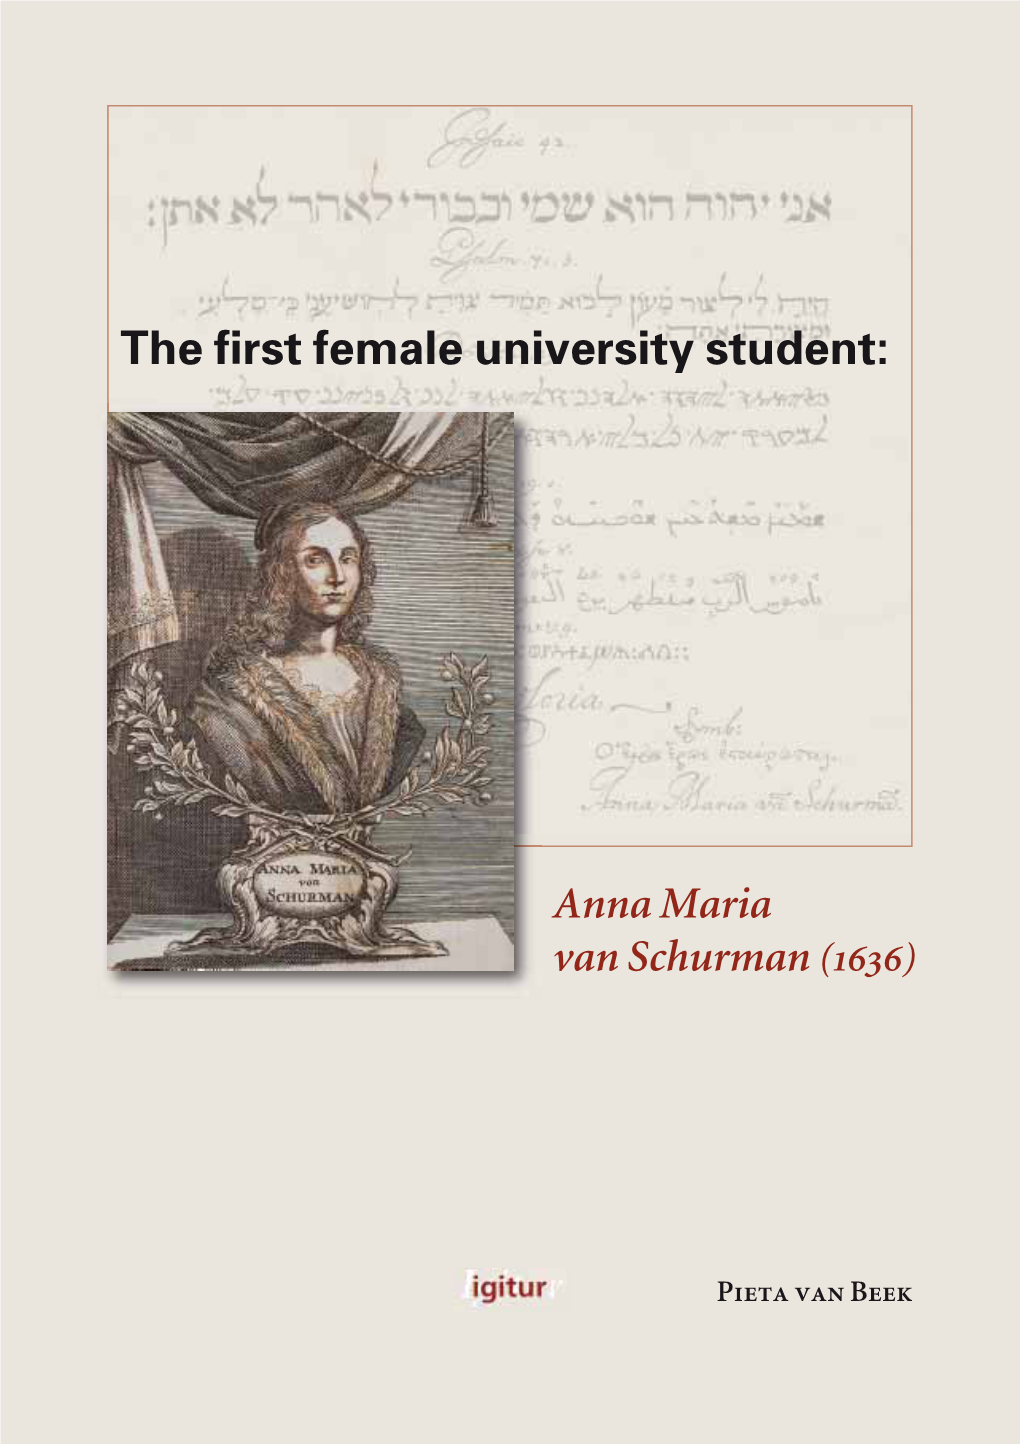 Anna Maria Van Schurman